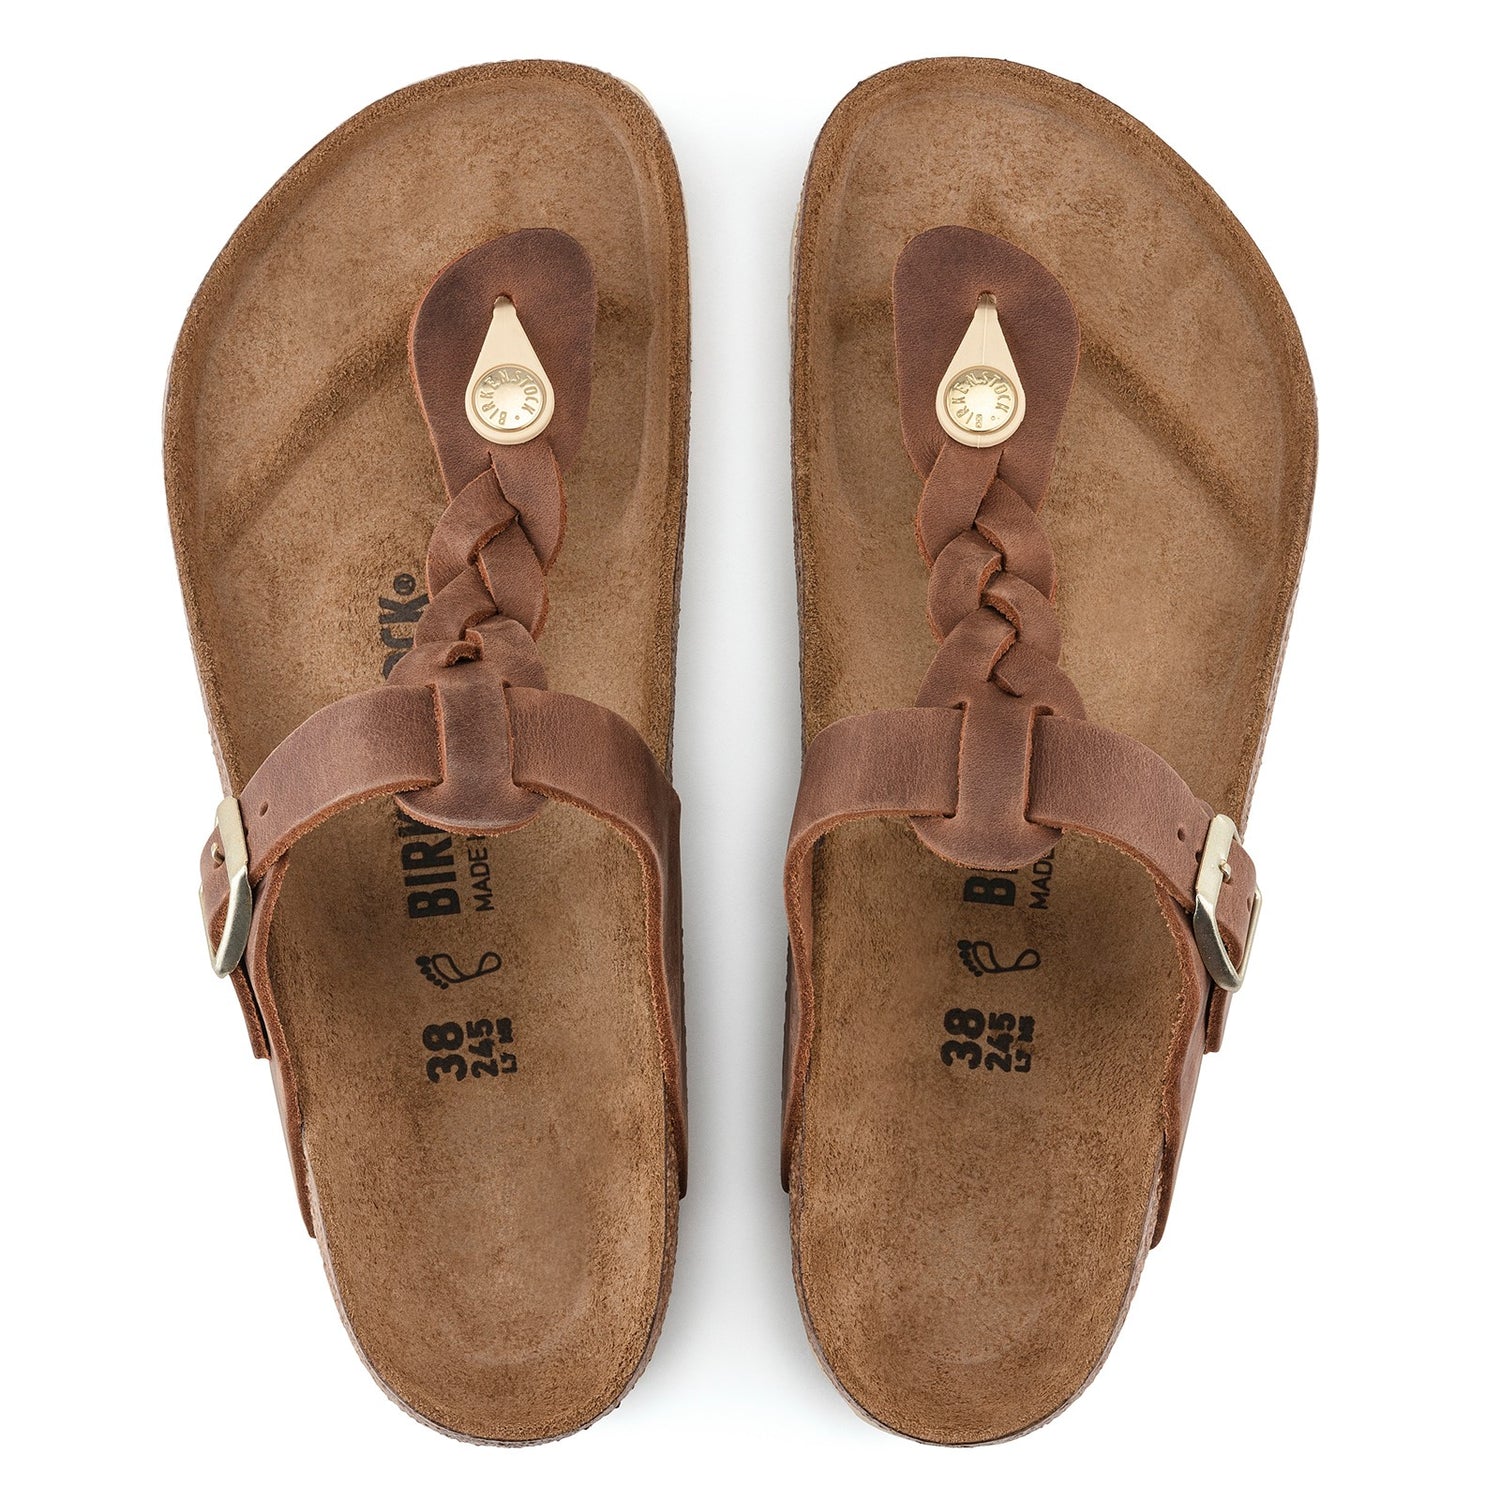 Peltz Shoes  Women's Birkenstock Gizeh Braid Sandal - Regular Width COGNAC 1021 355 R